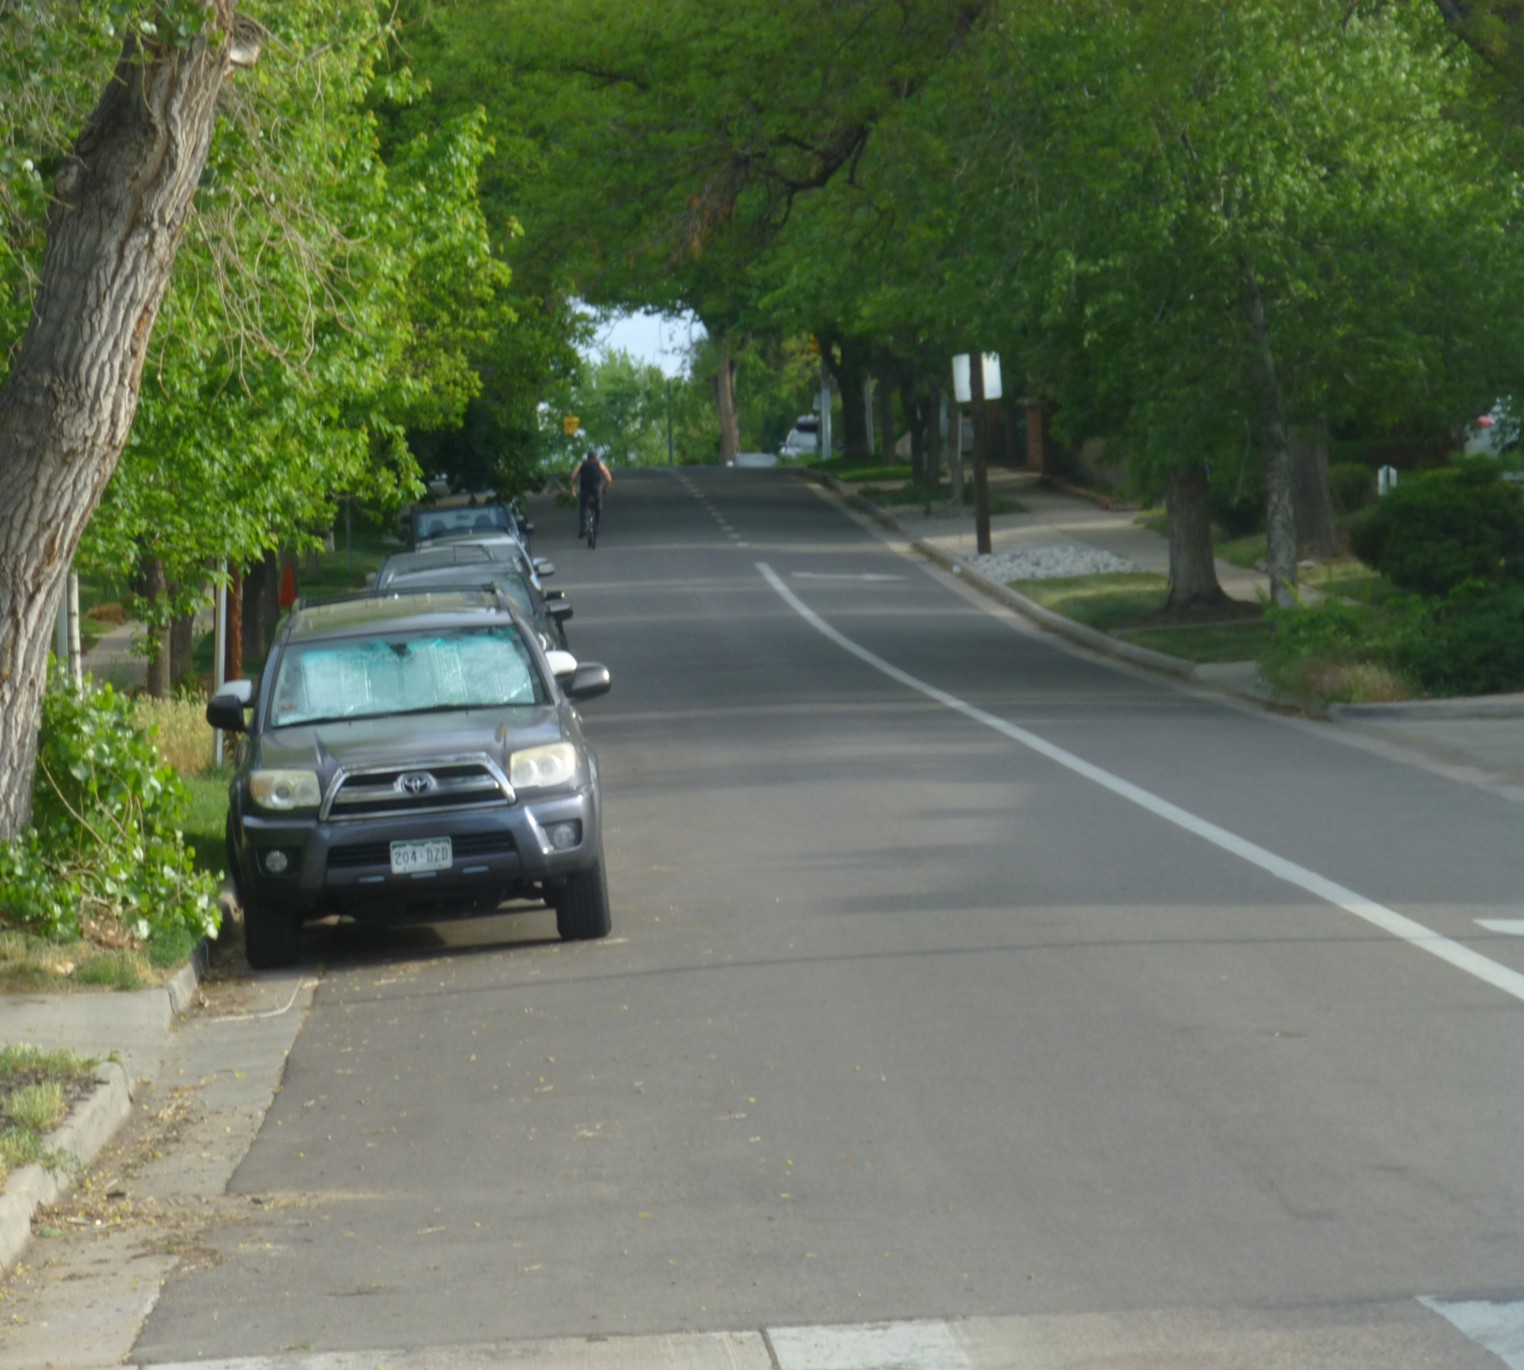 denver-bike-lanes-would-remove-hundreds-of-scarce-parking-spaces-westword